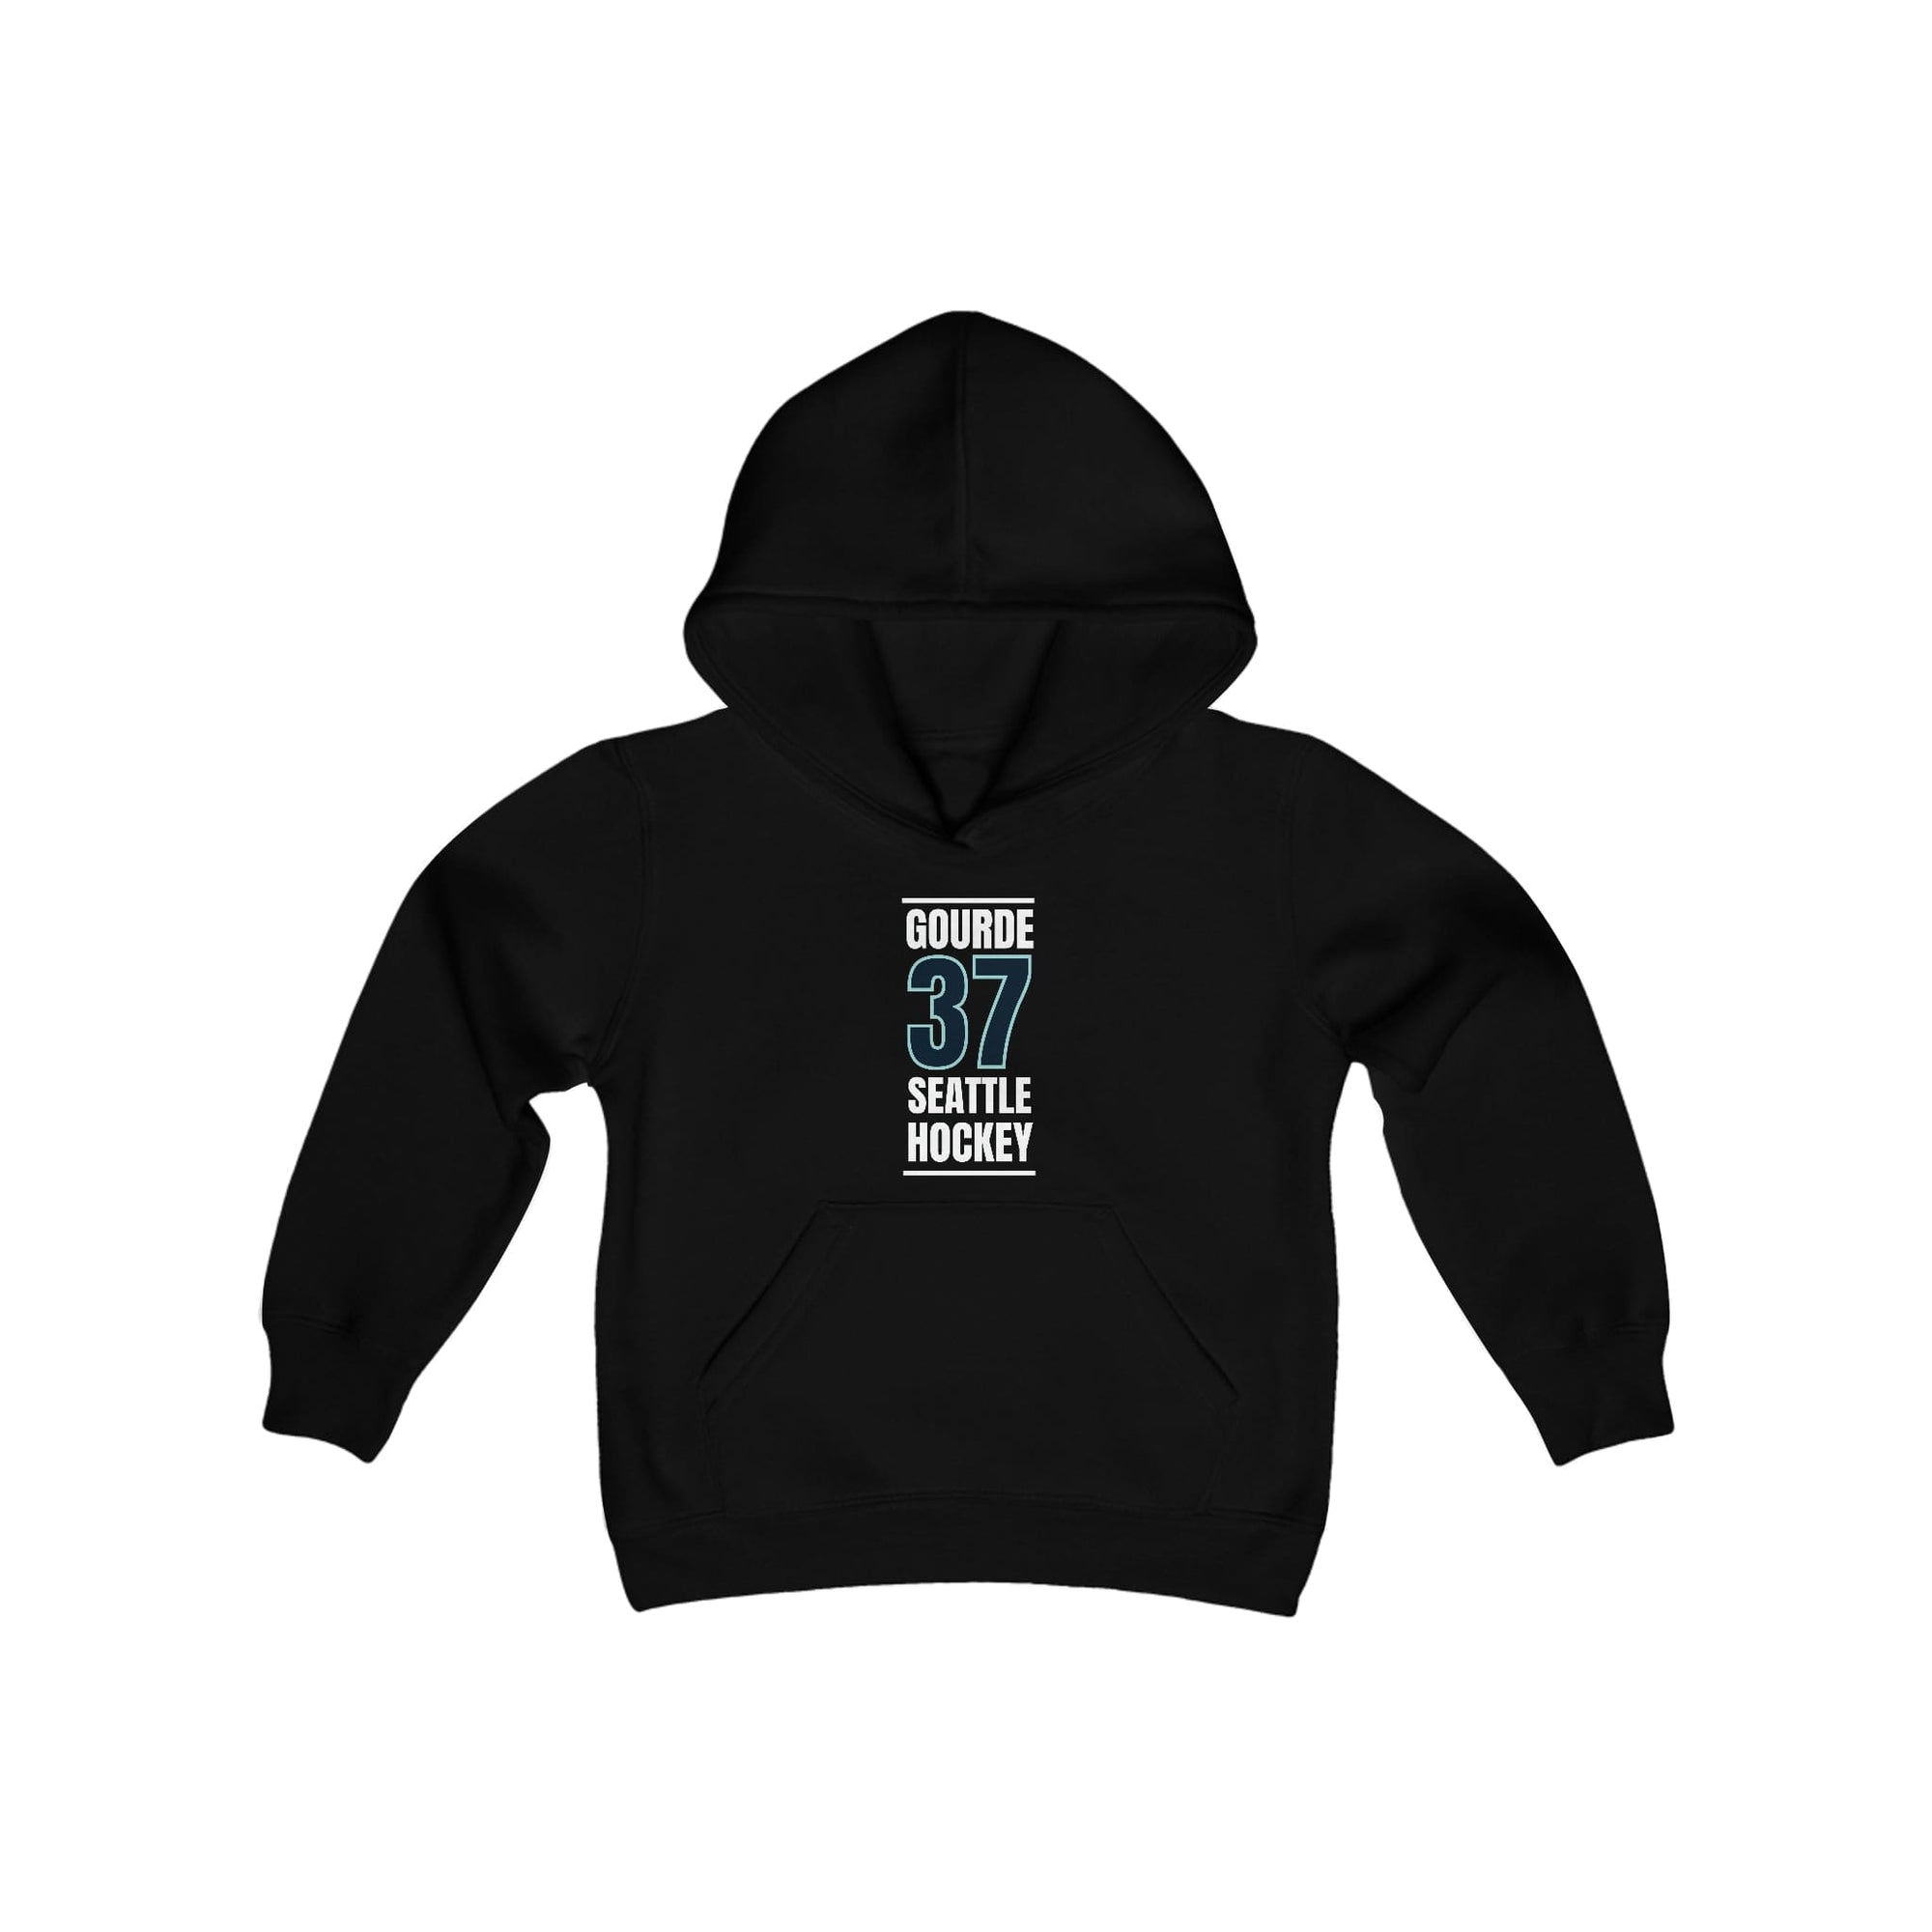 Kids clothes Gourde 37 Seattle Hockey Black Vertical Design Youth Hooded Sweatshirt